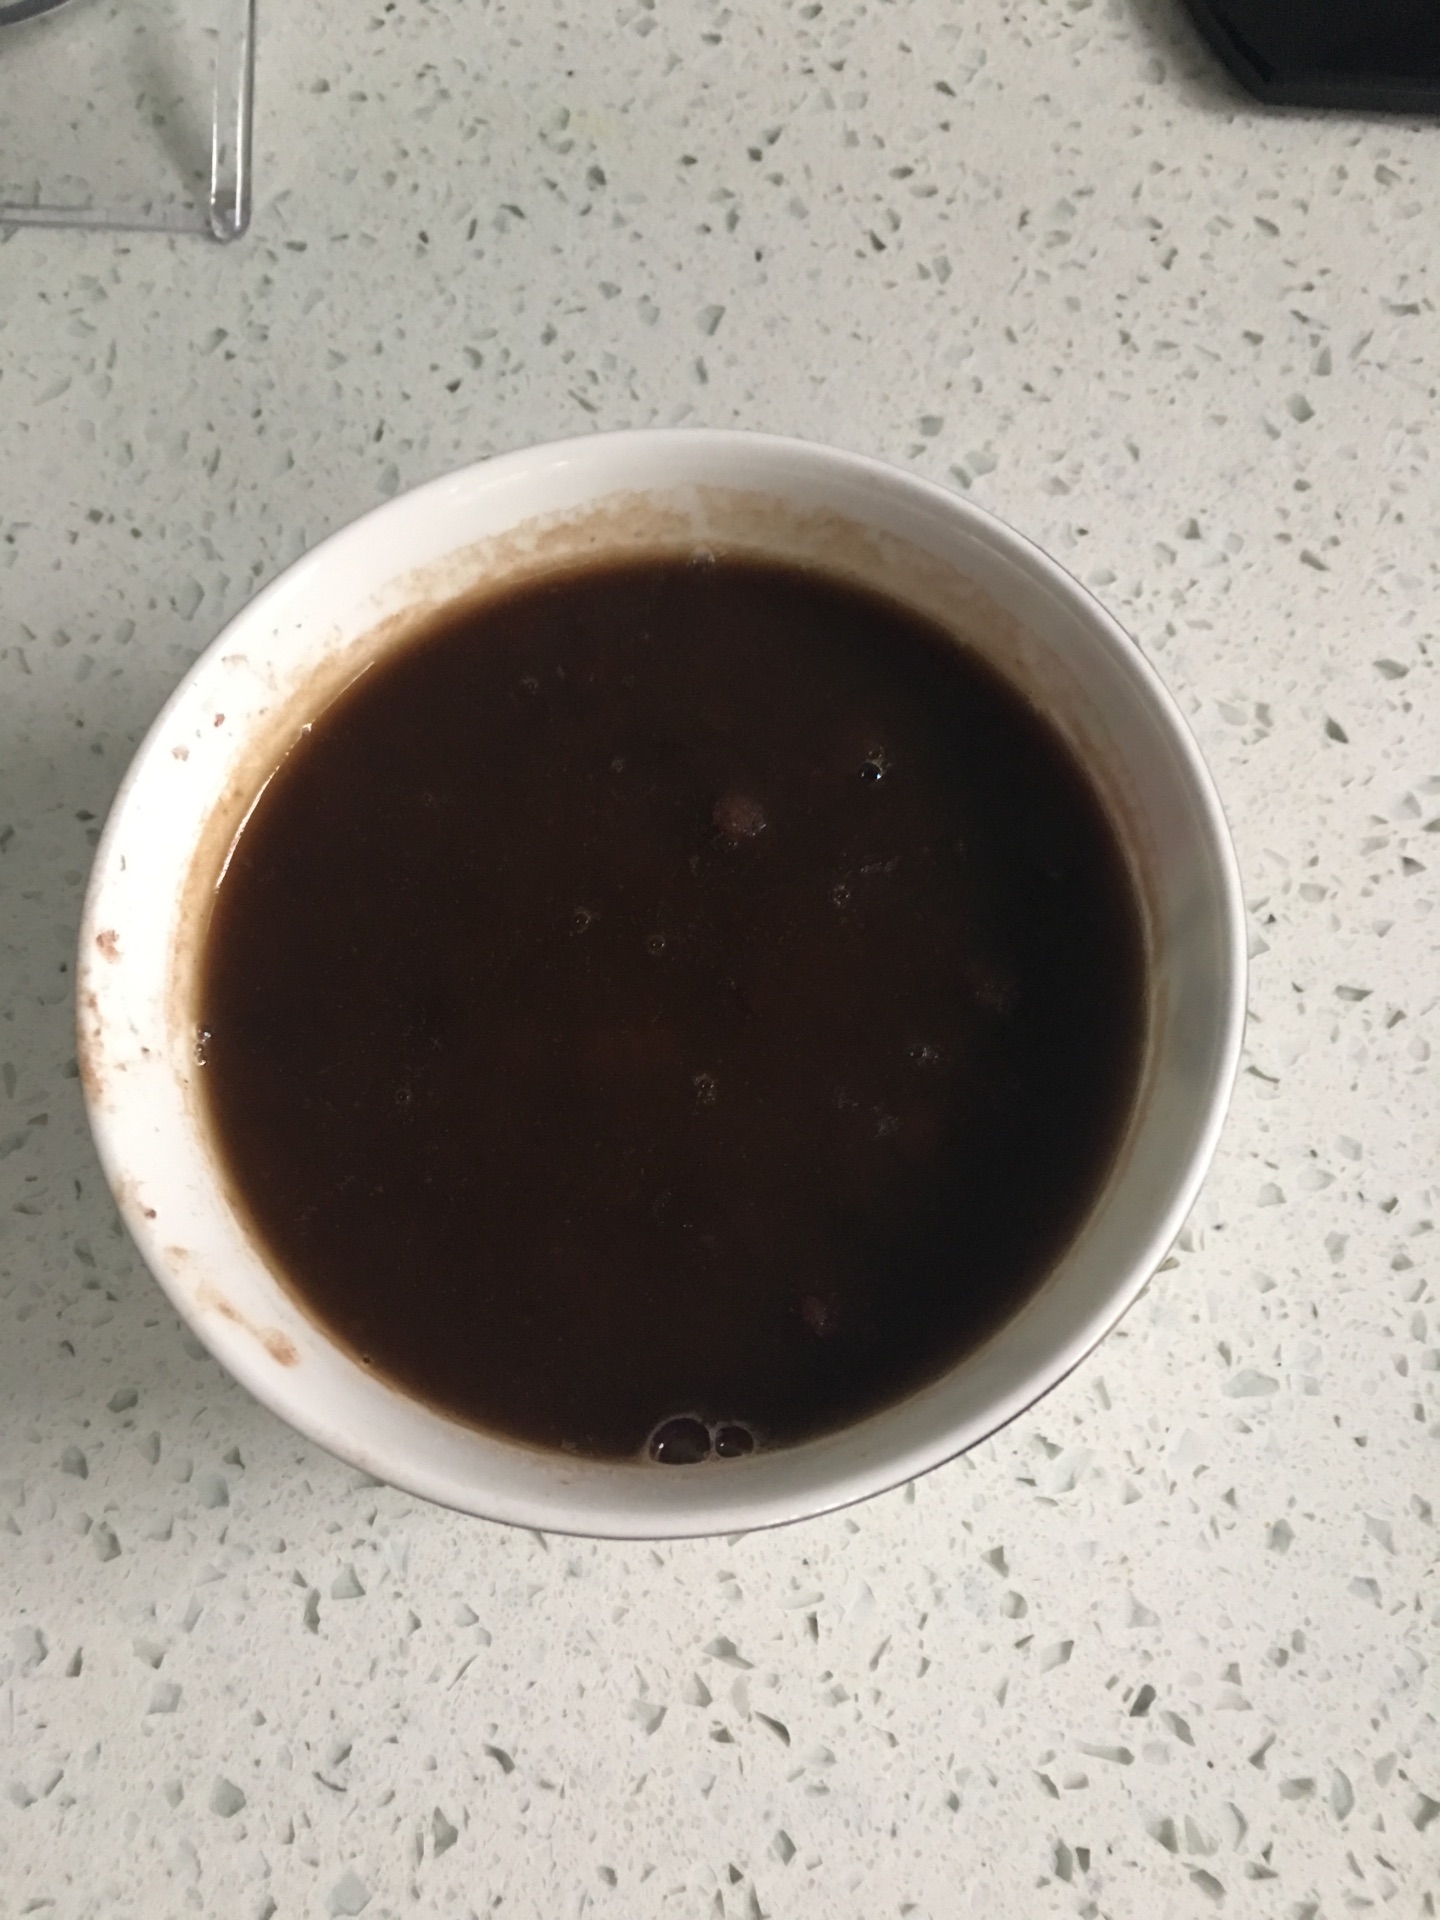 比奶茶还好喝的桂花豆沙小丸子_哔哩哔哩 (゜-゜)つロ 干杯~-bilibili